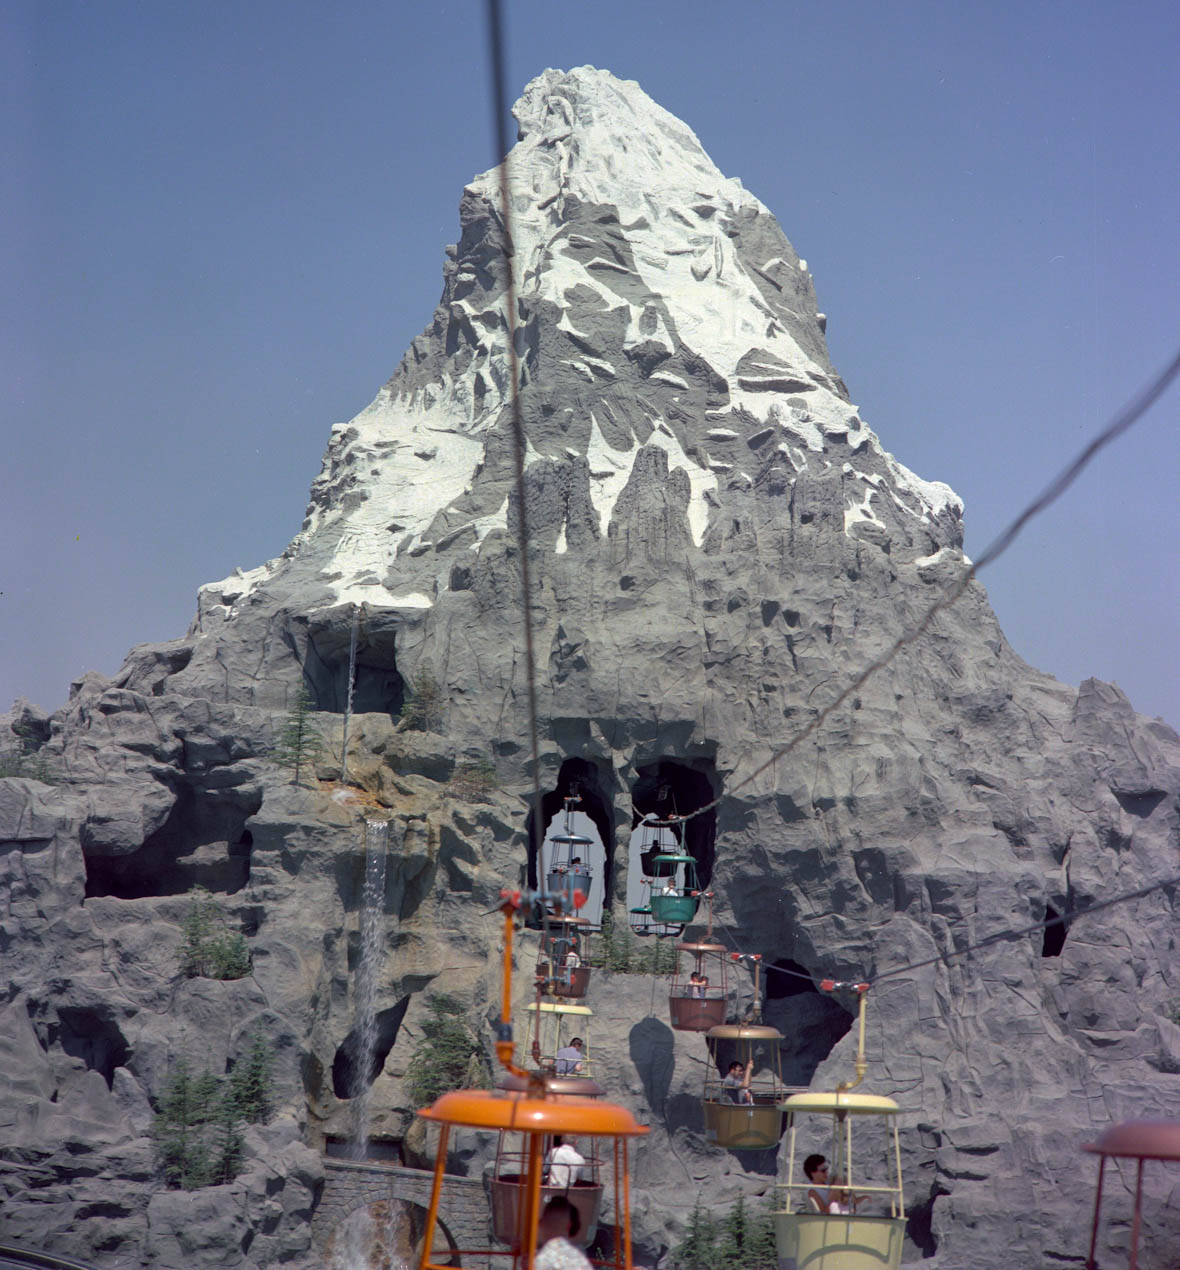 The Matterhorn Glacier Grotto in 1959